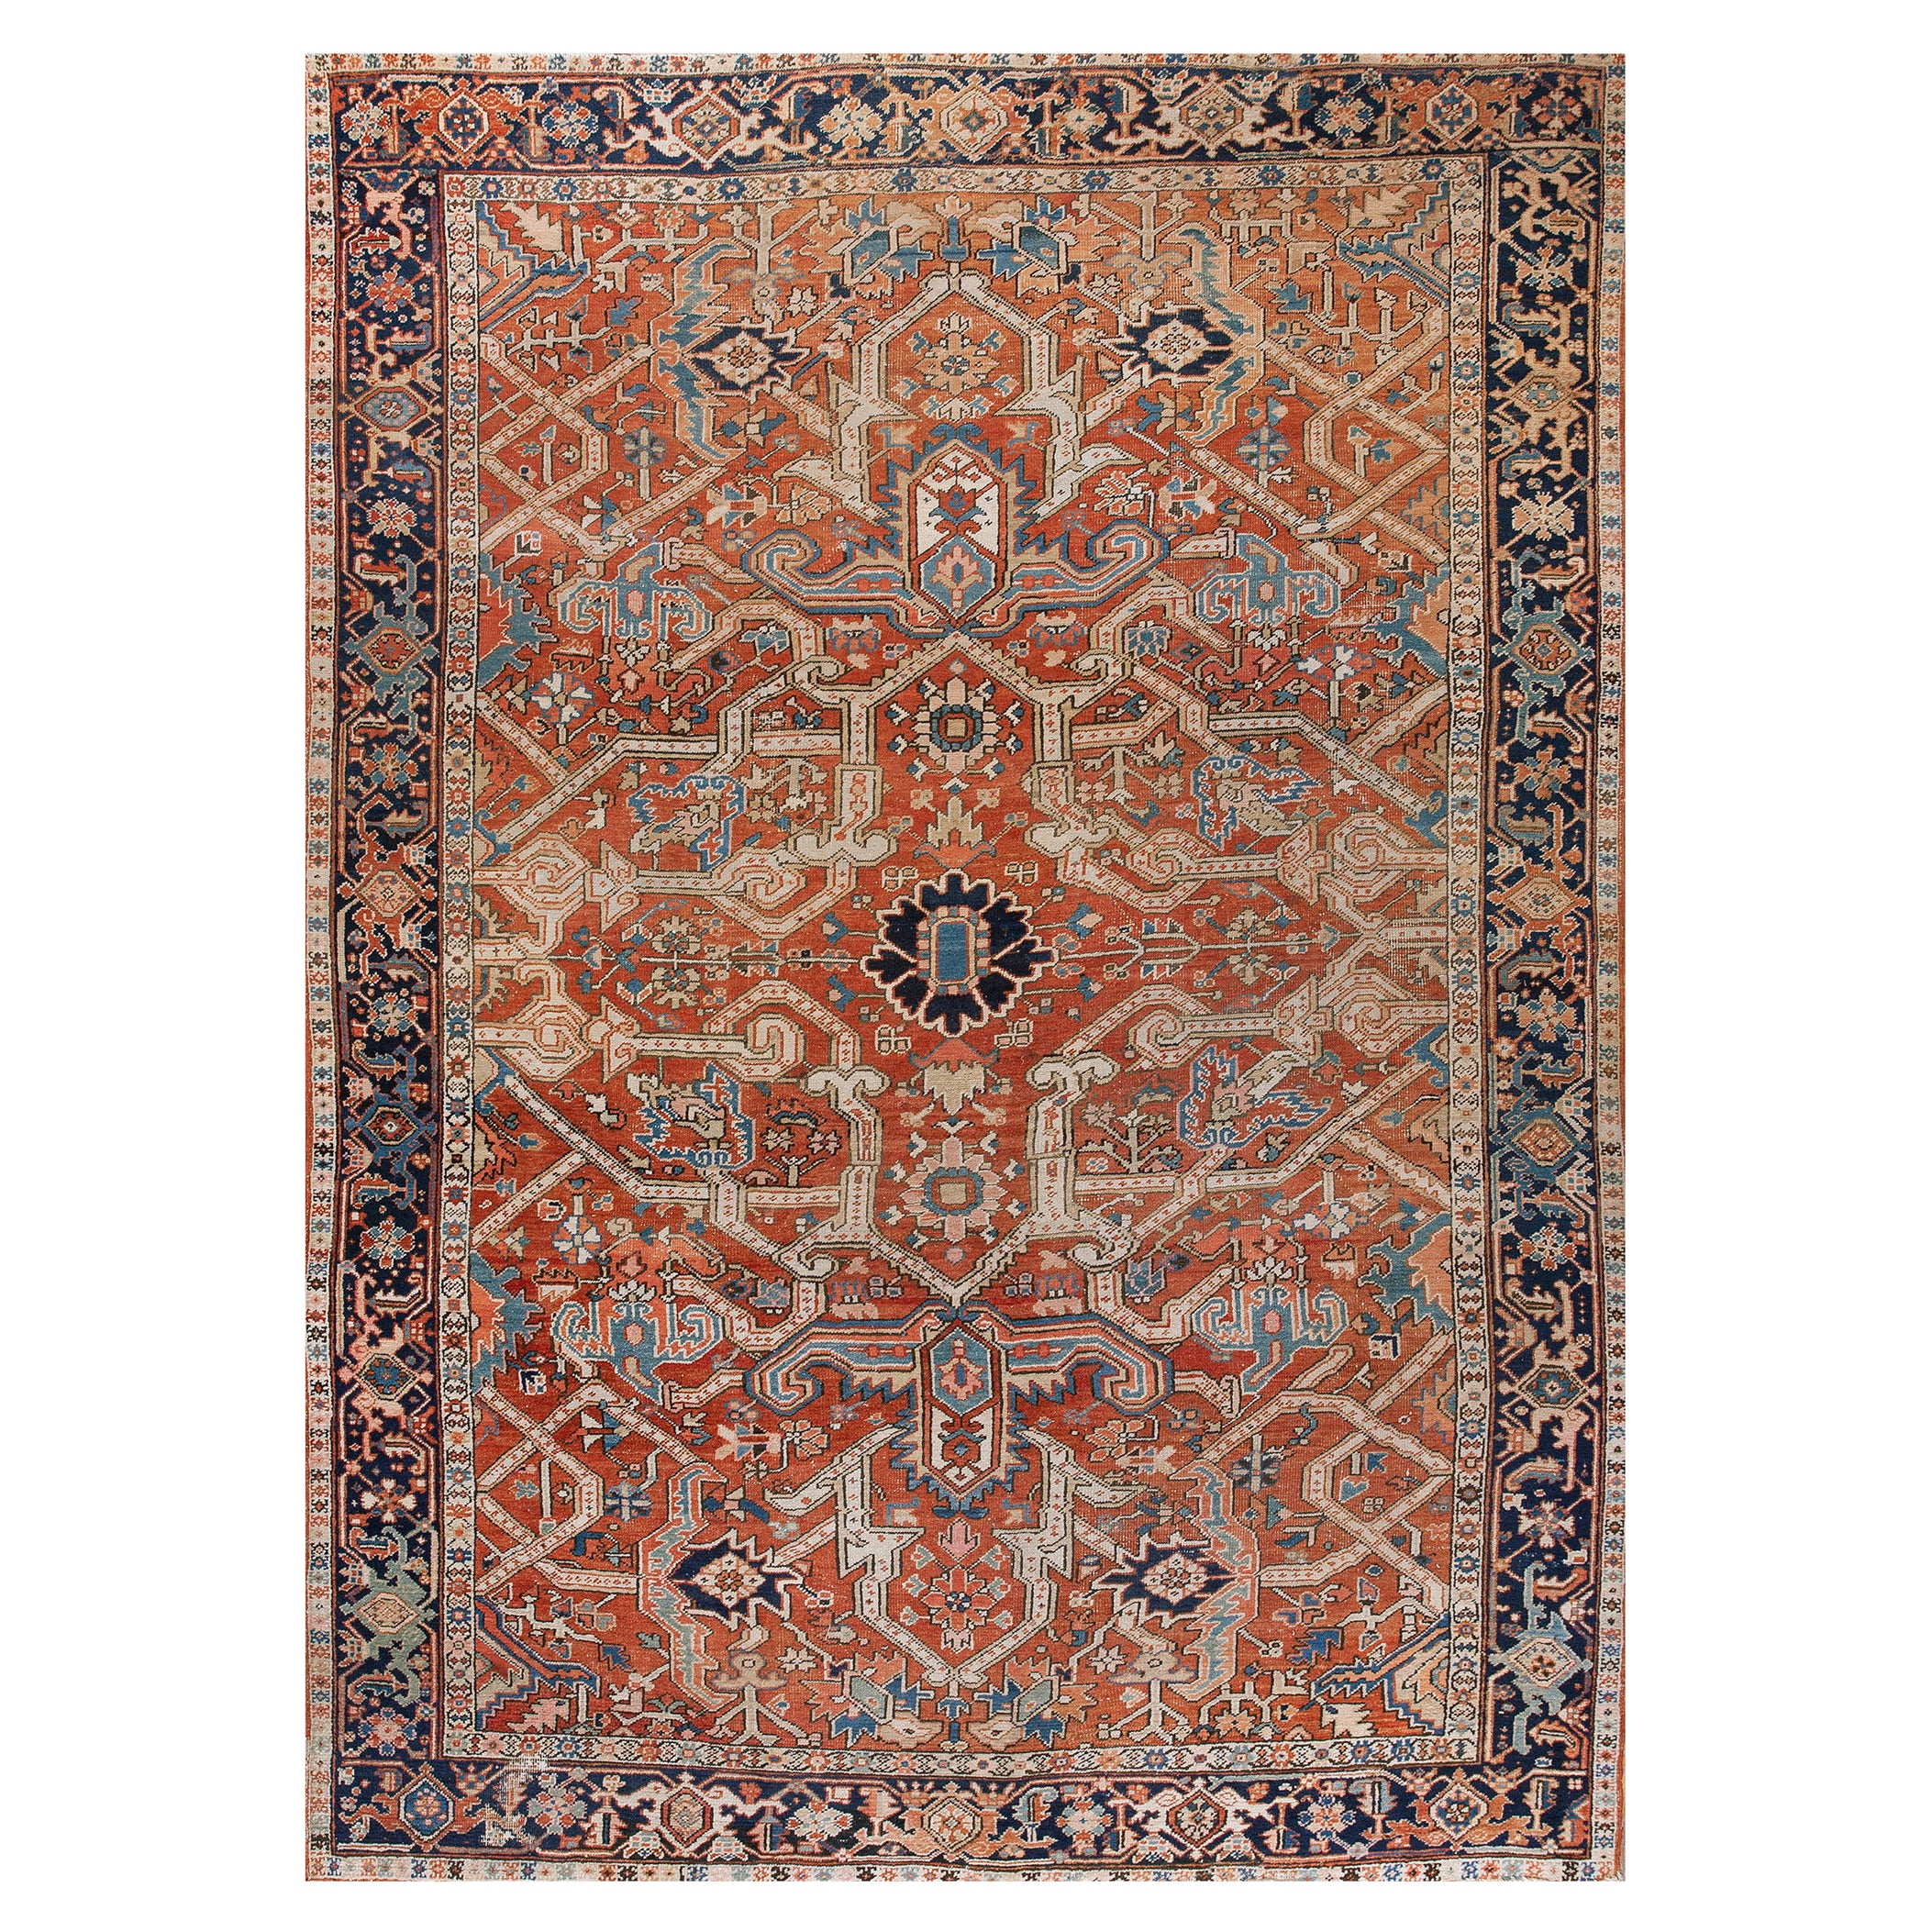 Late 19th Century N.W. Persian Heriz Carpet ( 8'3'' x 11'6'' - 250 x 350 cm )